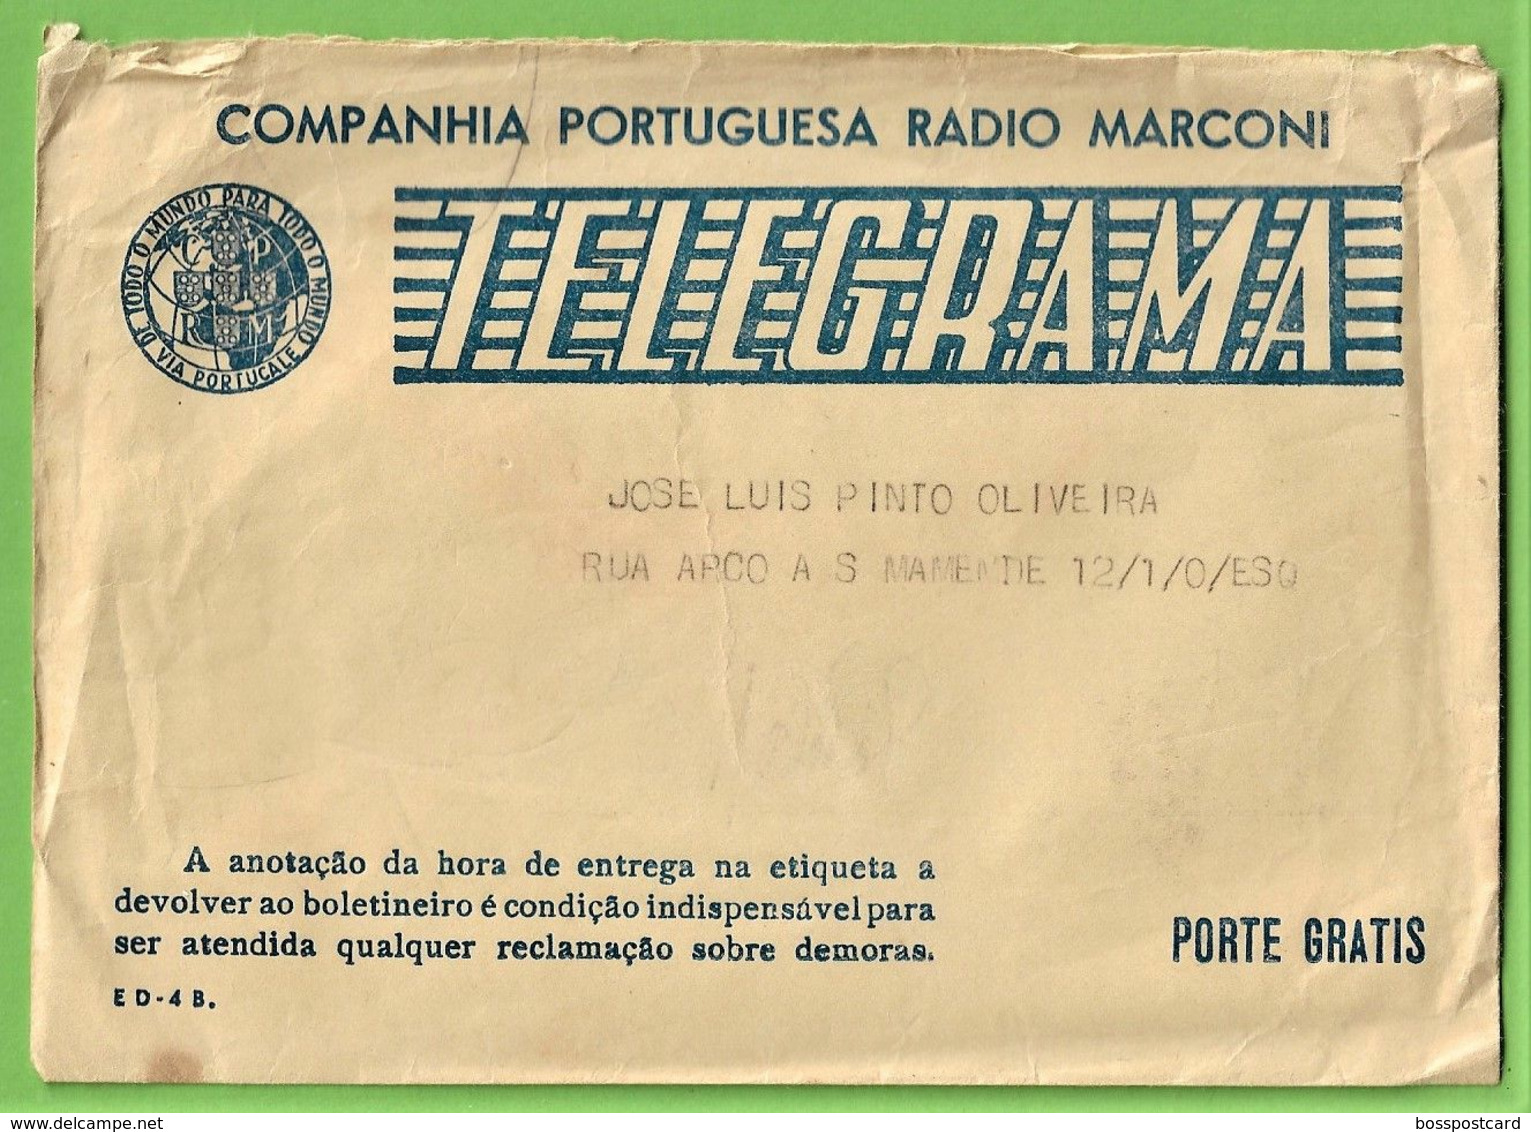 História Postal - Funchal - Telegrama - Rádio Marconi - Telegram - Madeira - Portugal - Storia Postale